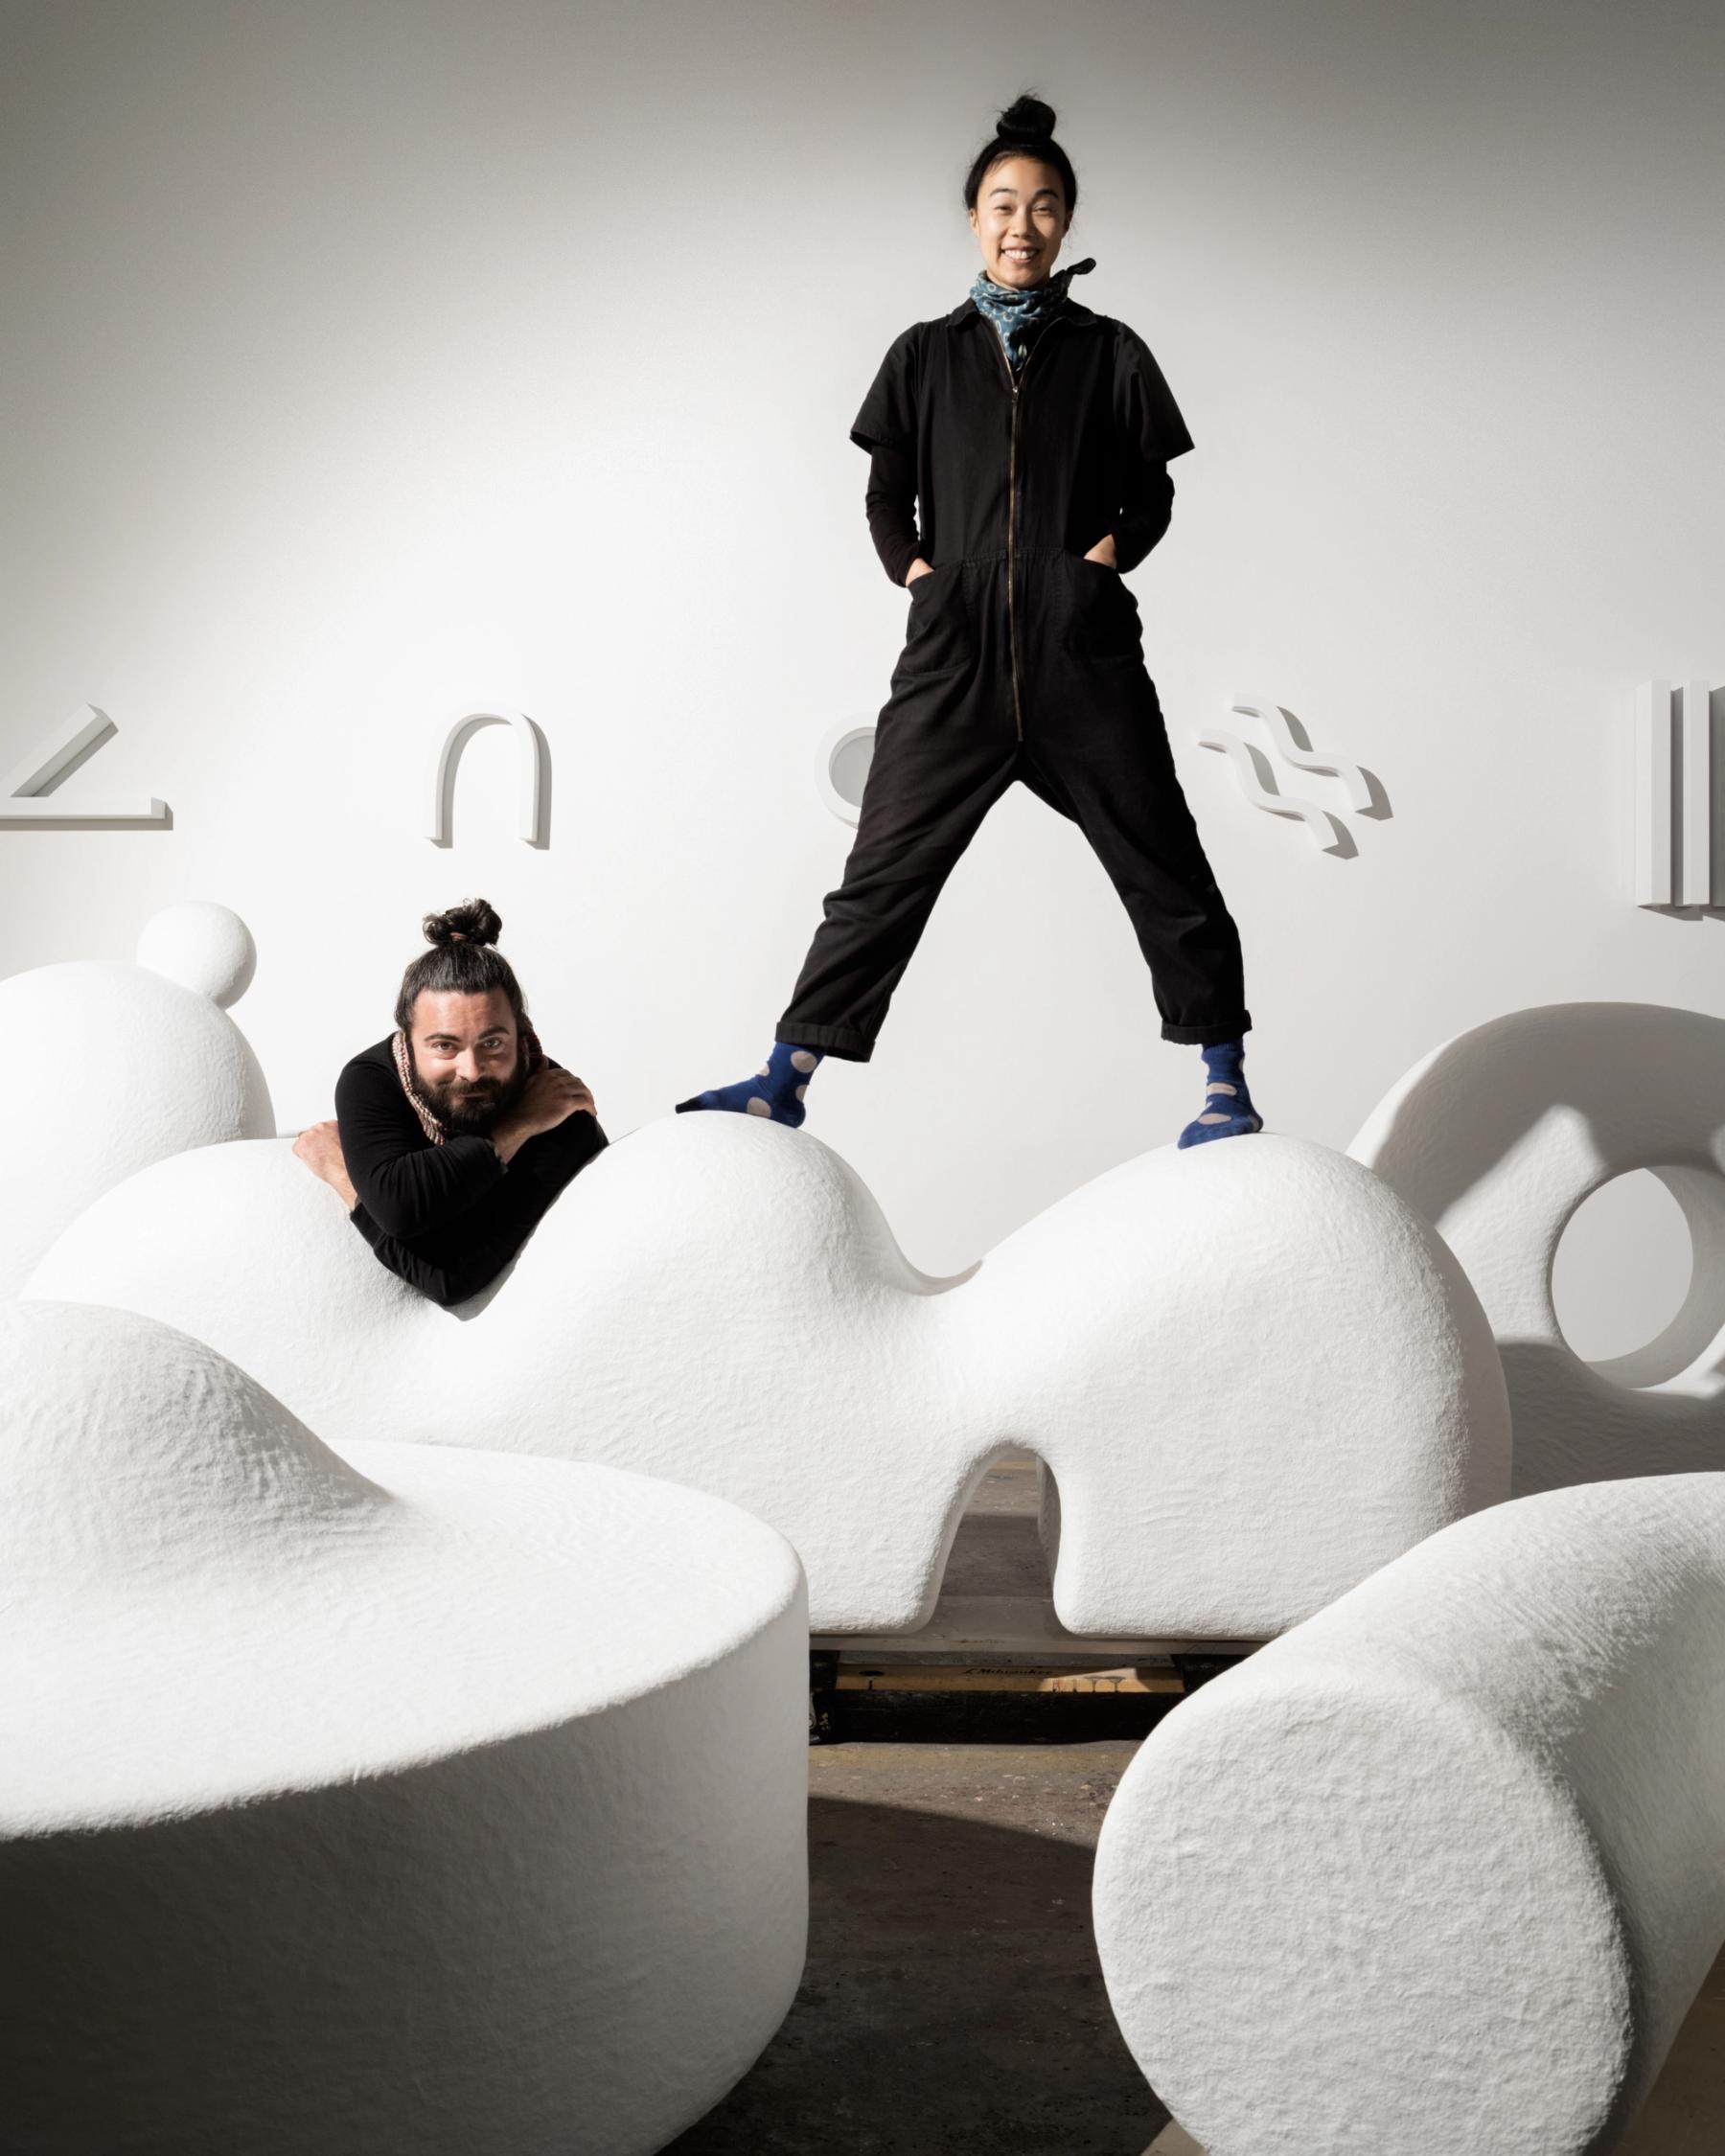 Adam Frezza & Terri Chiao posing with their sculptures.